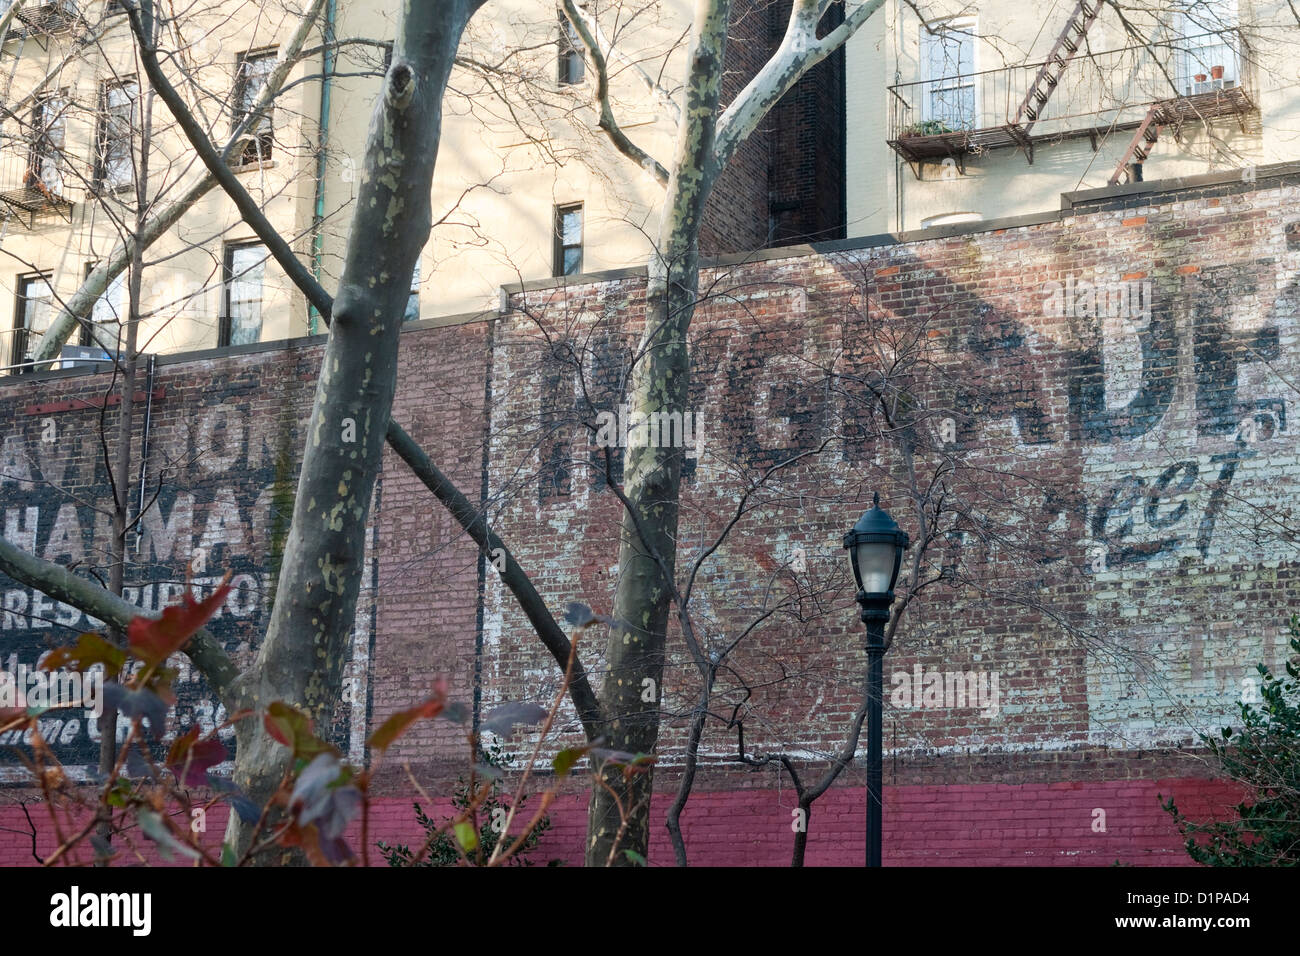 New York, NY - Old faded billboard advertising for Hygrade and Avignone Pharmacy on a brick wall at Winston Churchill Square. Stock Photo